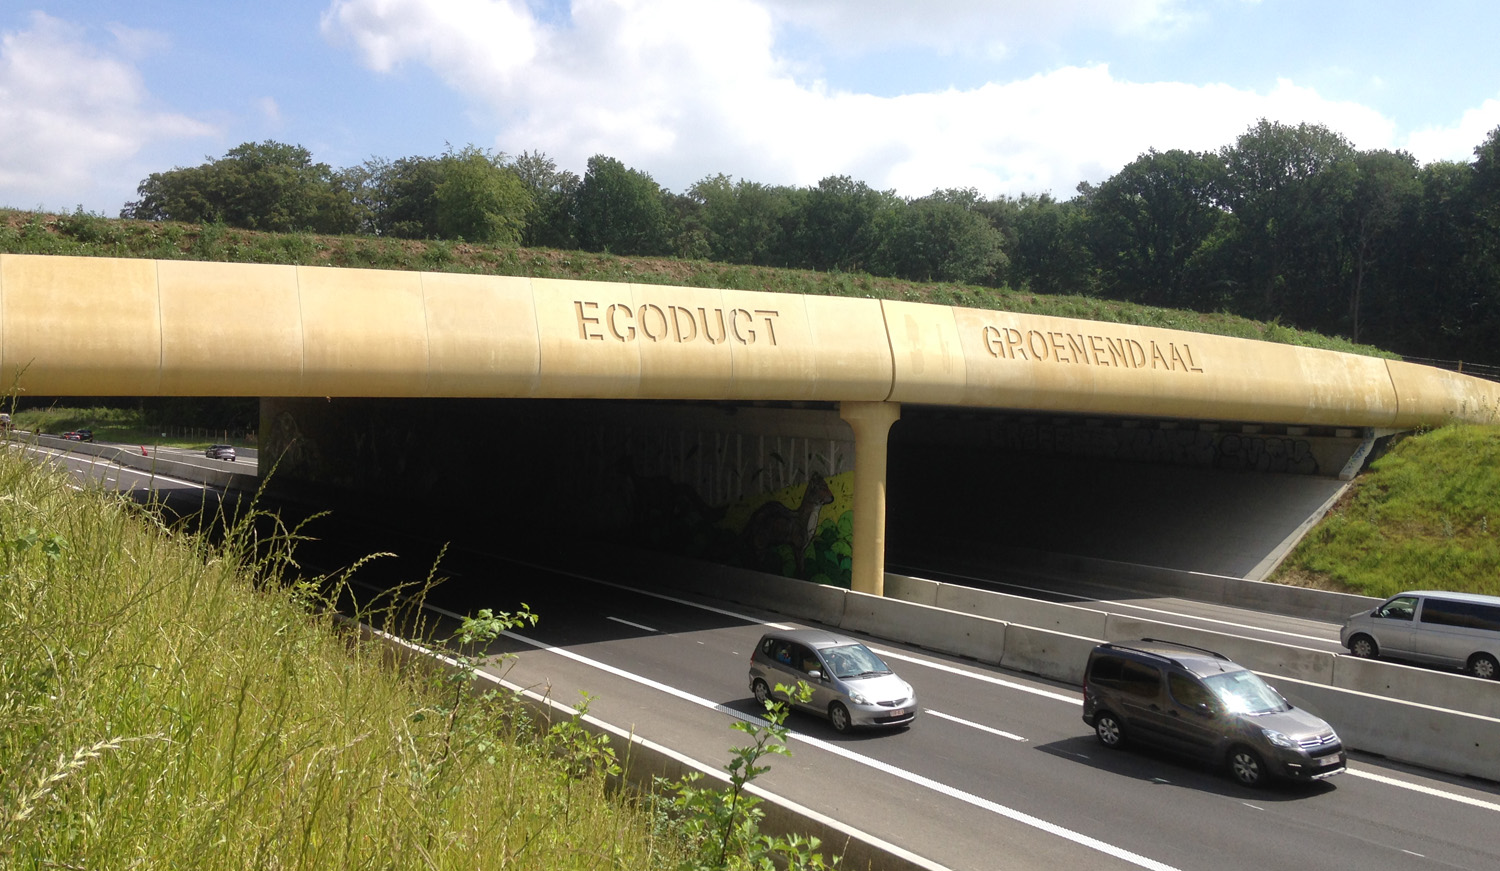 Ecoduct Groenendaal